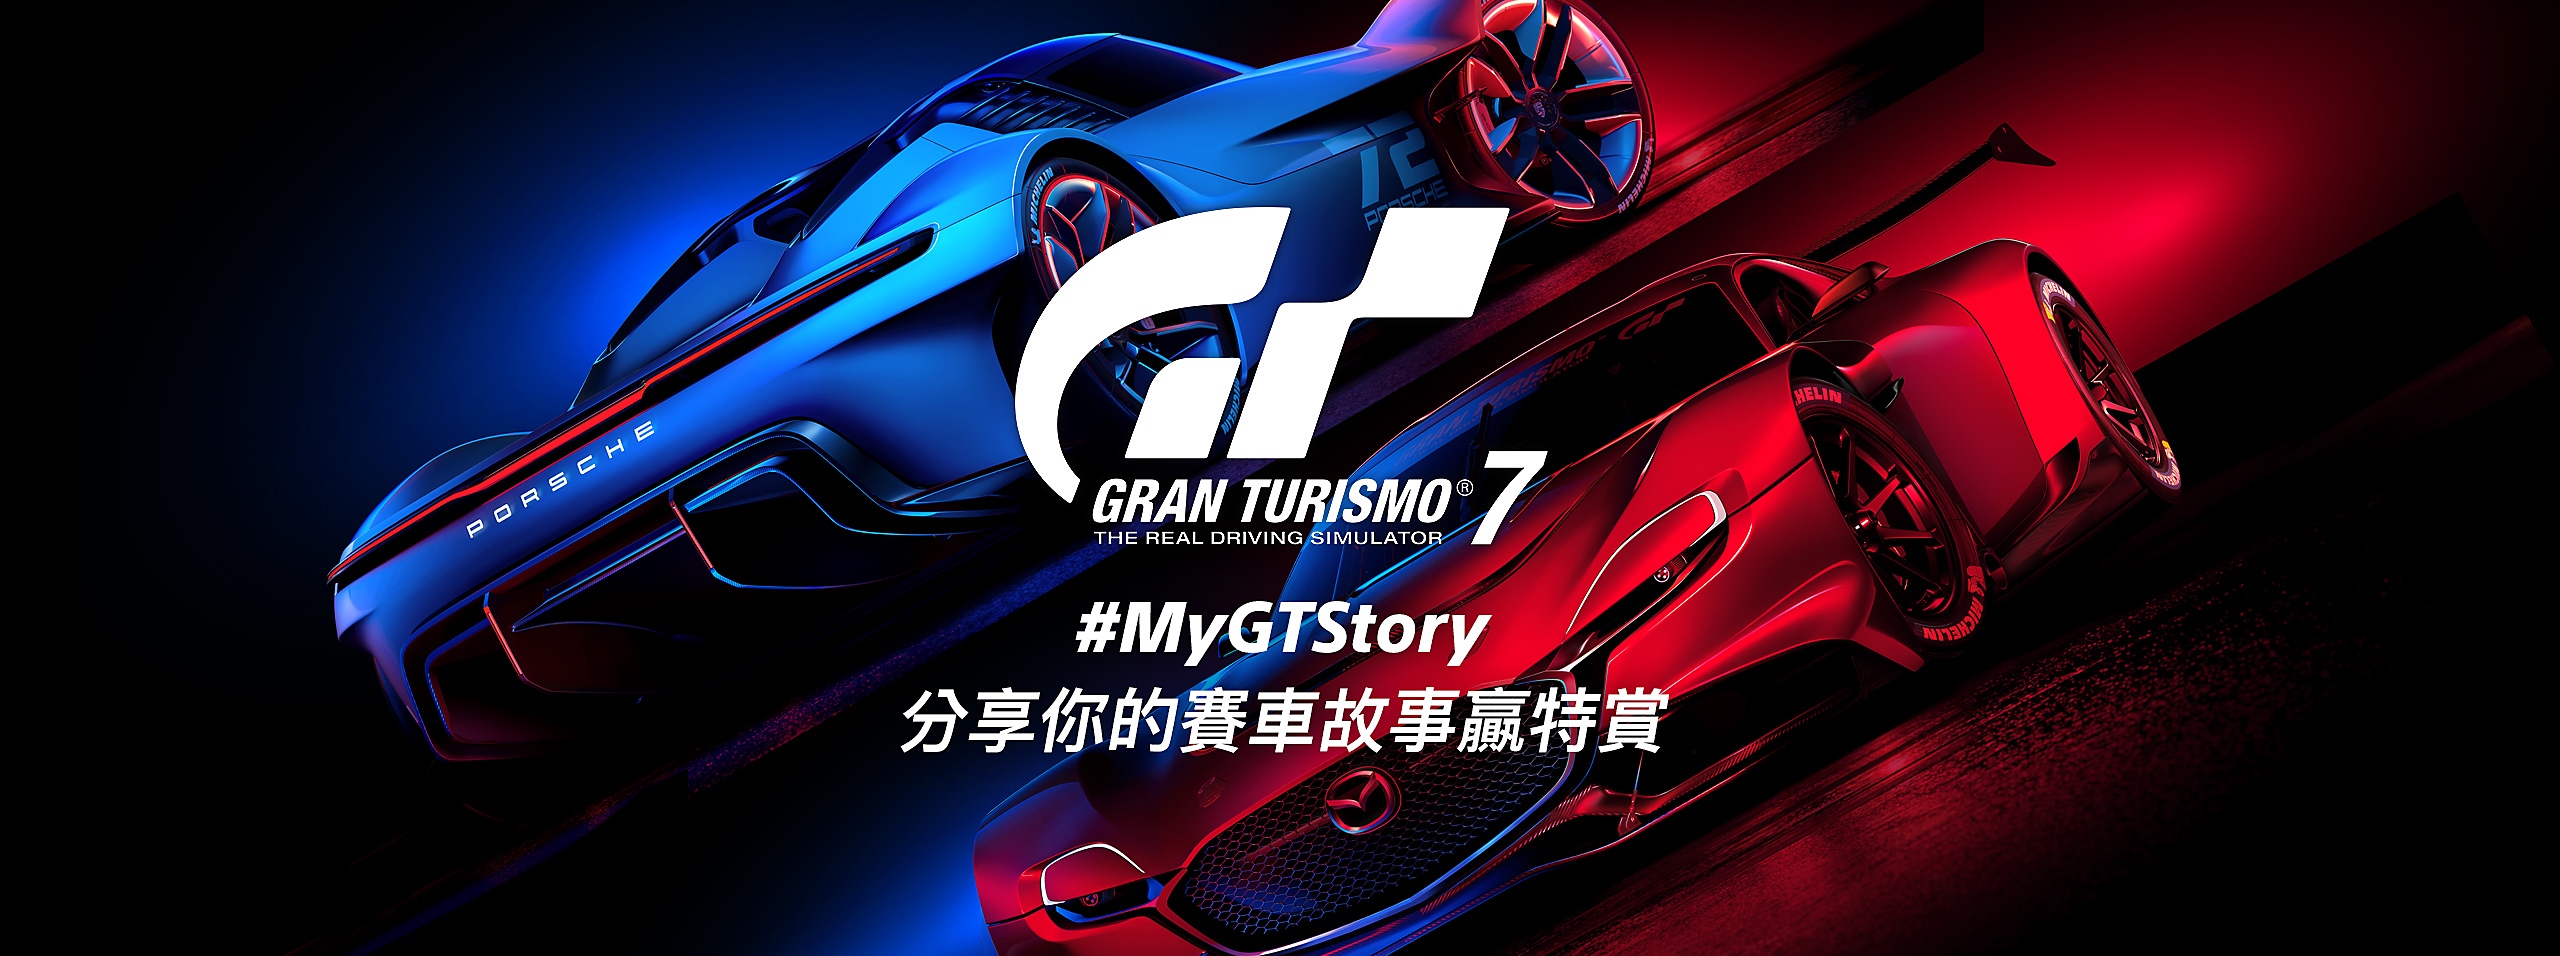 My GT Story Logo